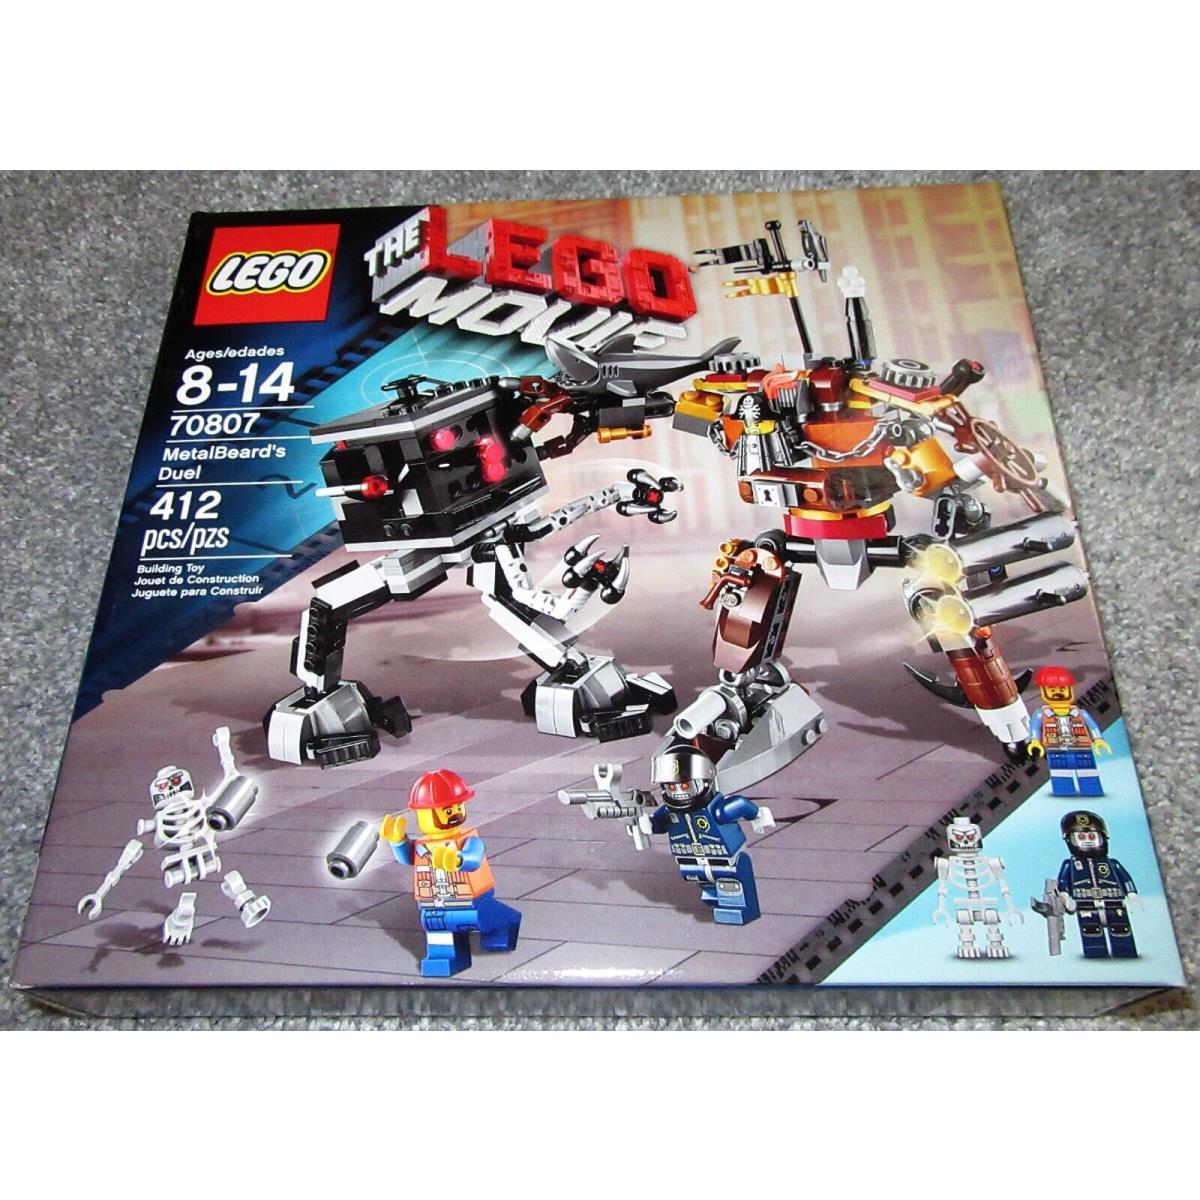 Lego 70807 The Lego Movie Metalbeard`s Duel Retired Nisb Robo Swat Skeletron